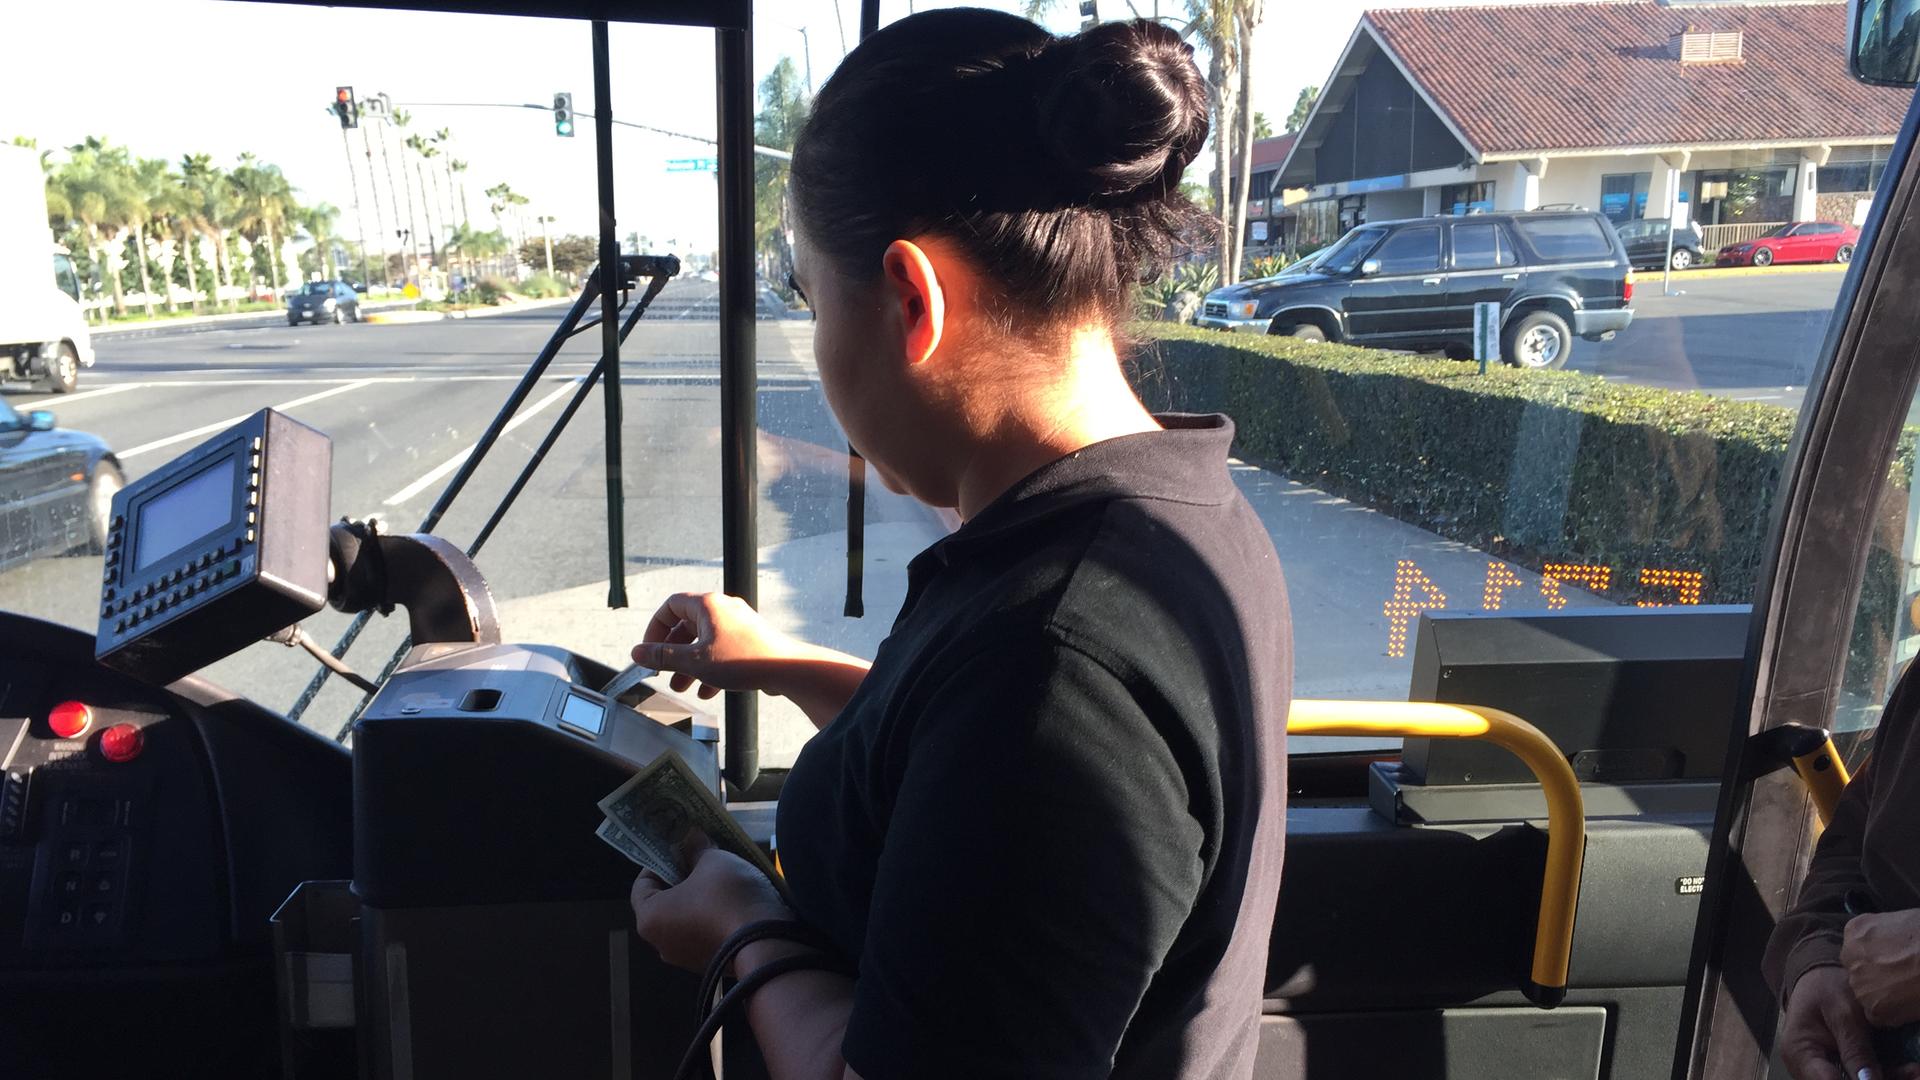 Woman putting bills in public bus machine, with windshield behind her